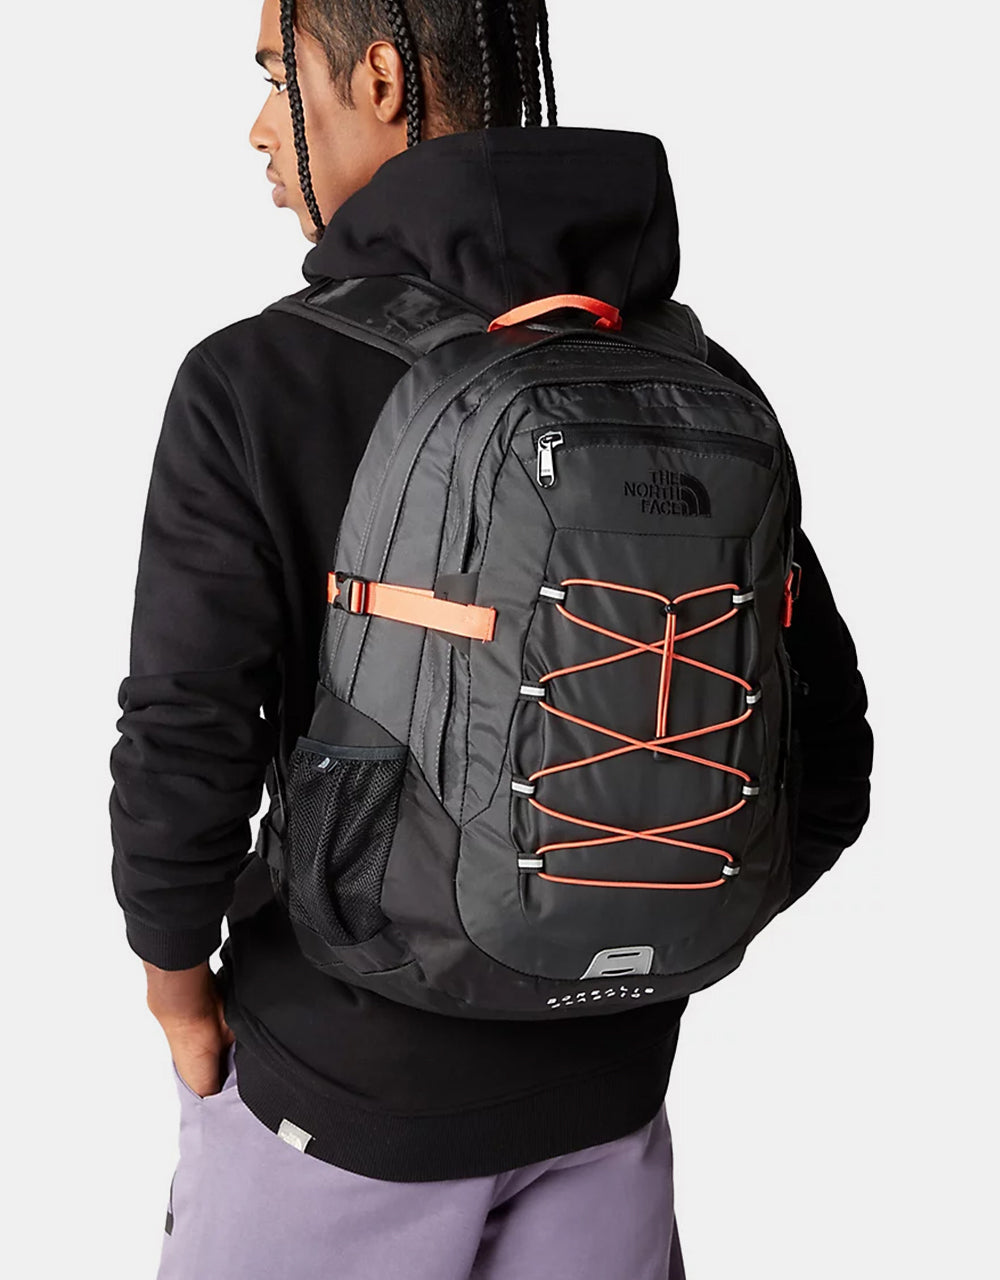 The North Face Borealis Classic Backpack - Asphalt Grey/Retro Orange